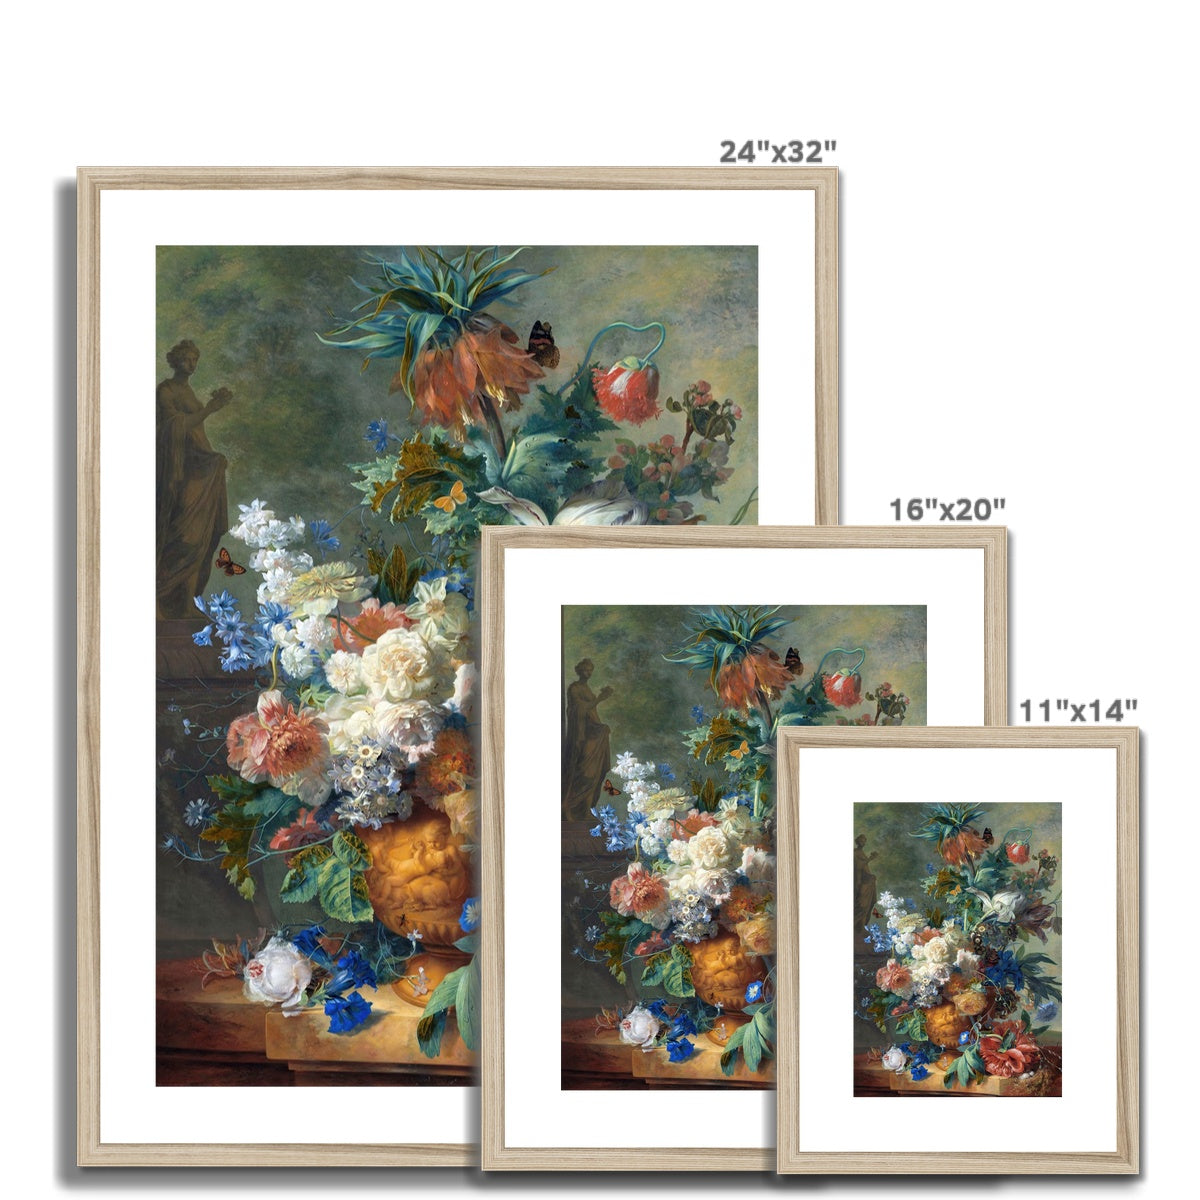 Jan van Huysum Framed Open Edition Art Print. &#39;Still Life with Flowers&#39;. Art Gallery Historic Art